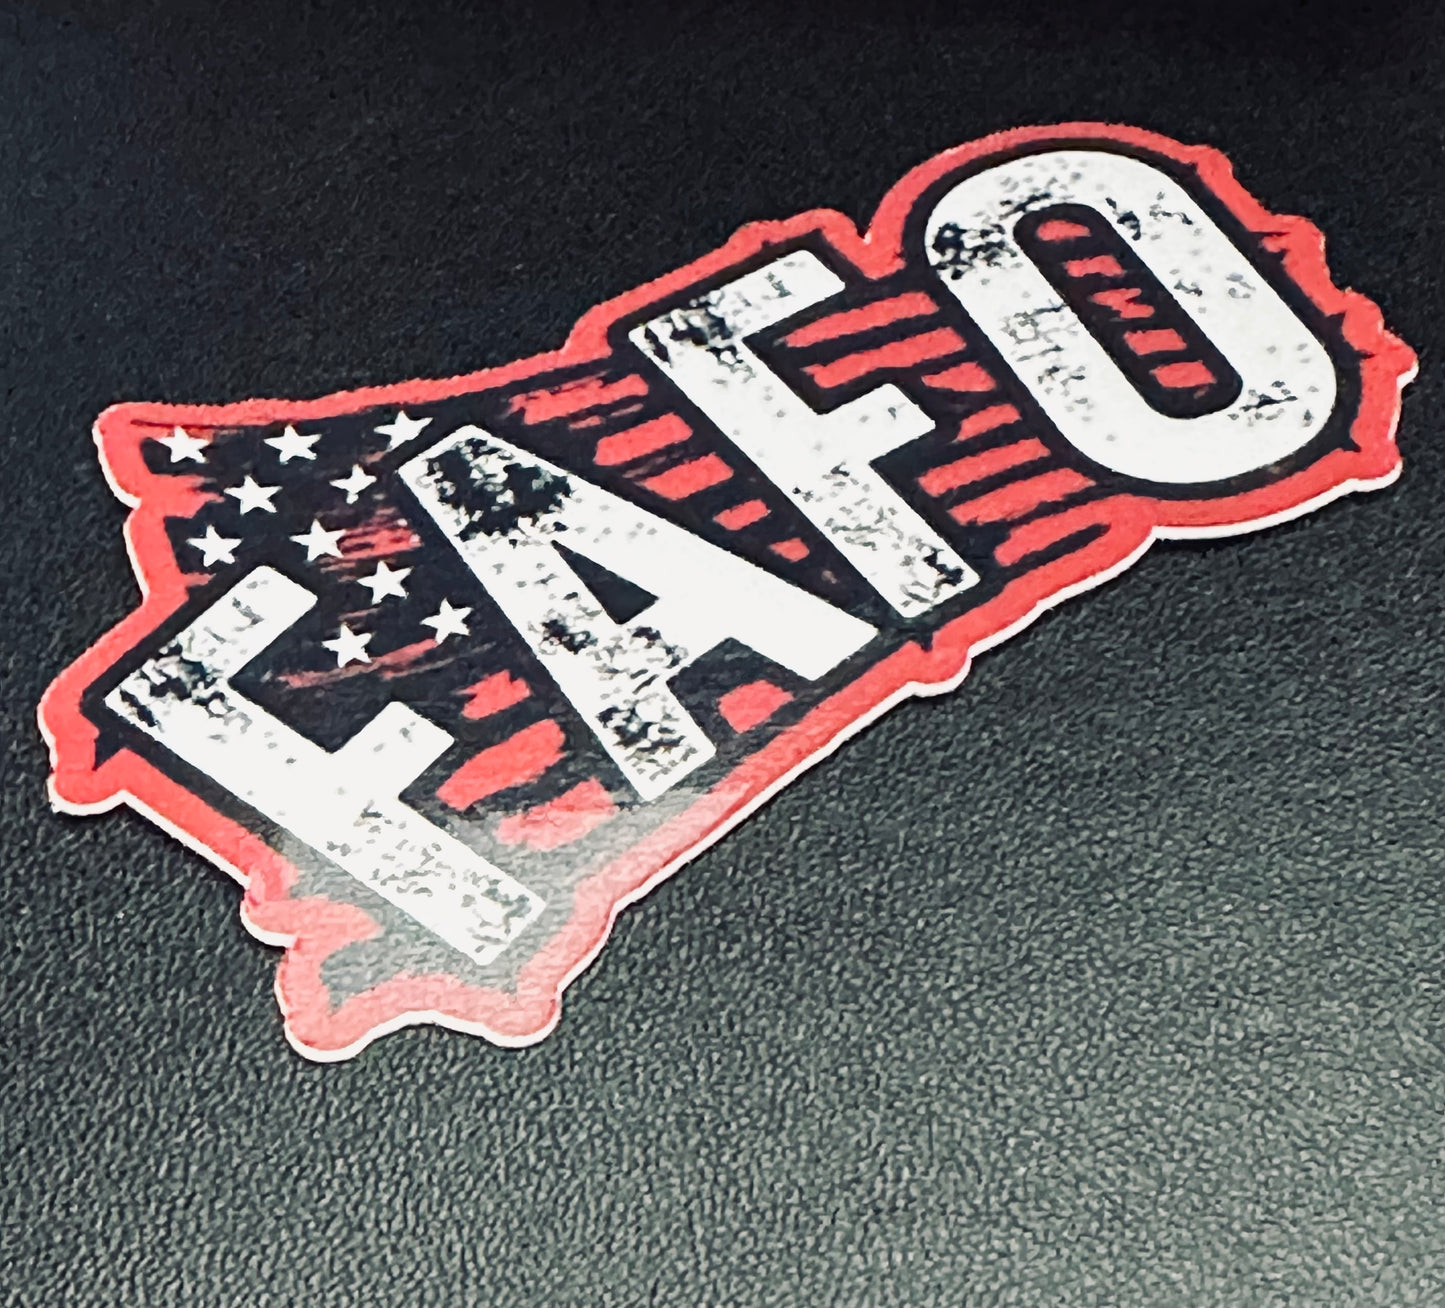 FAFO 3.25"x1.75" Inch Vinyl DECAL Sticker #12